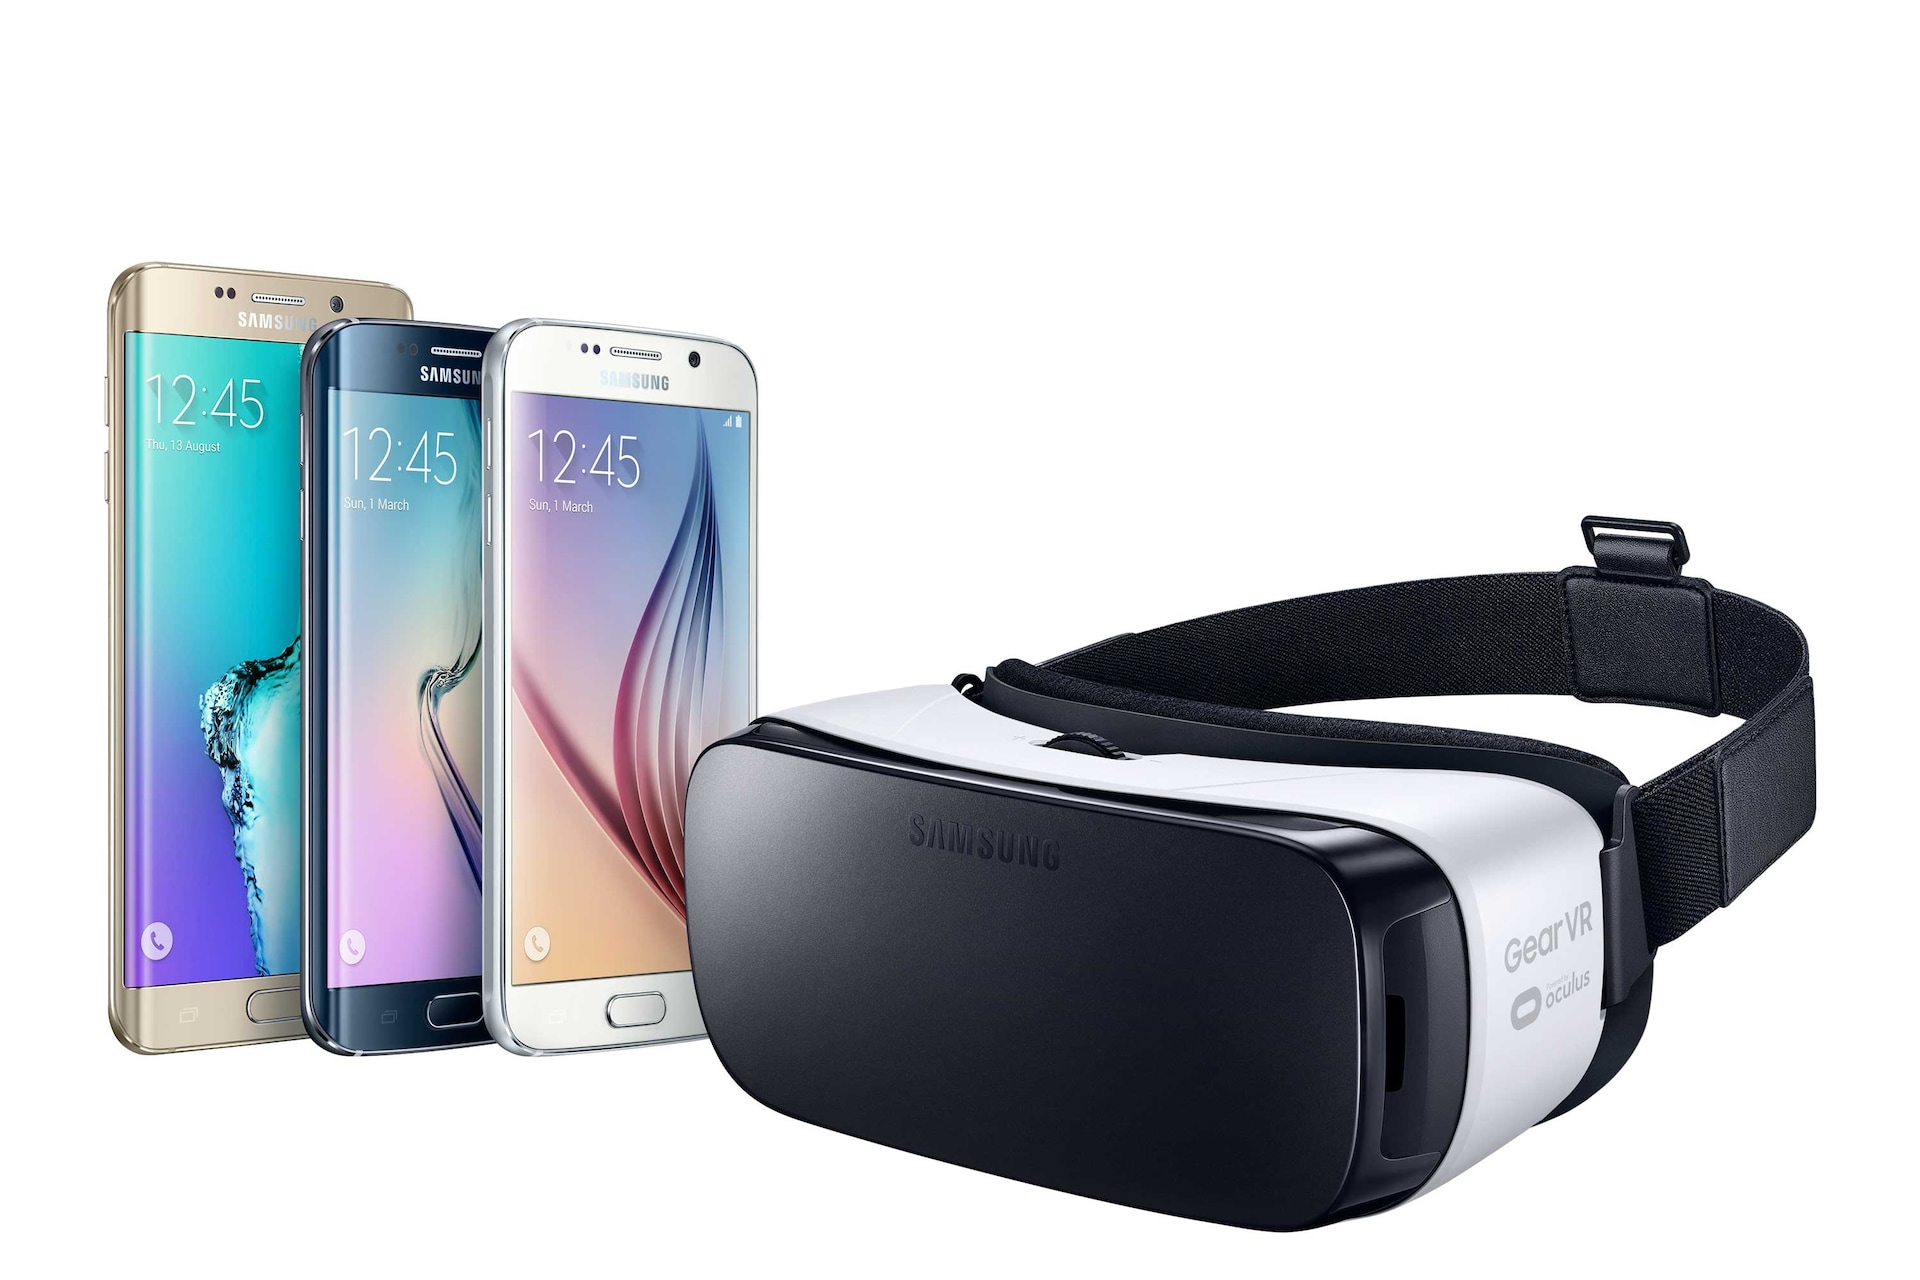 Samsung Gear VR - Virtual Reality Headset | Samsung UK3000 x 2000